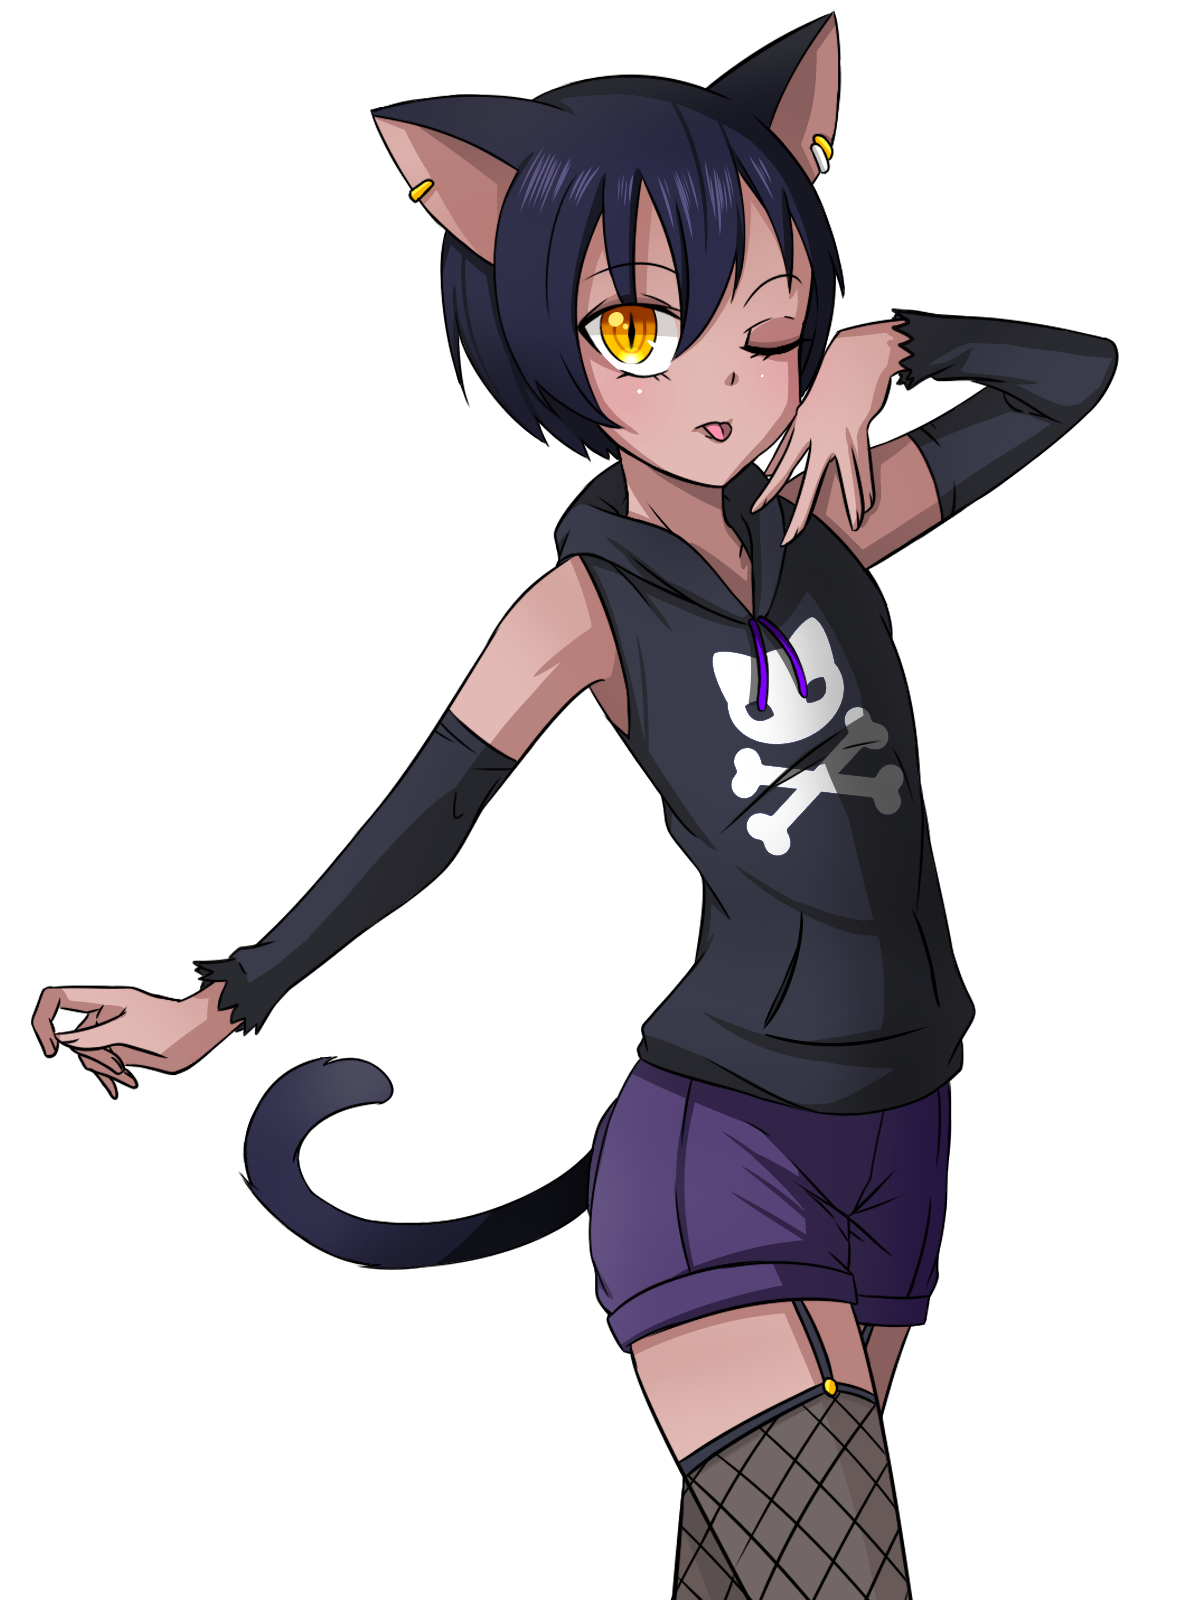 Anime Black Cat Boy Original. by Moonlight7EarlTea on DeviantArt